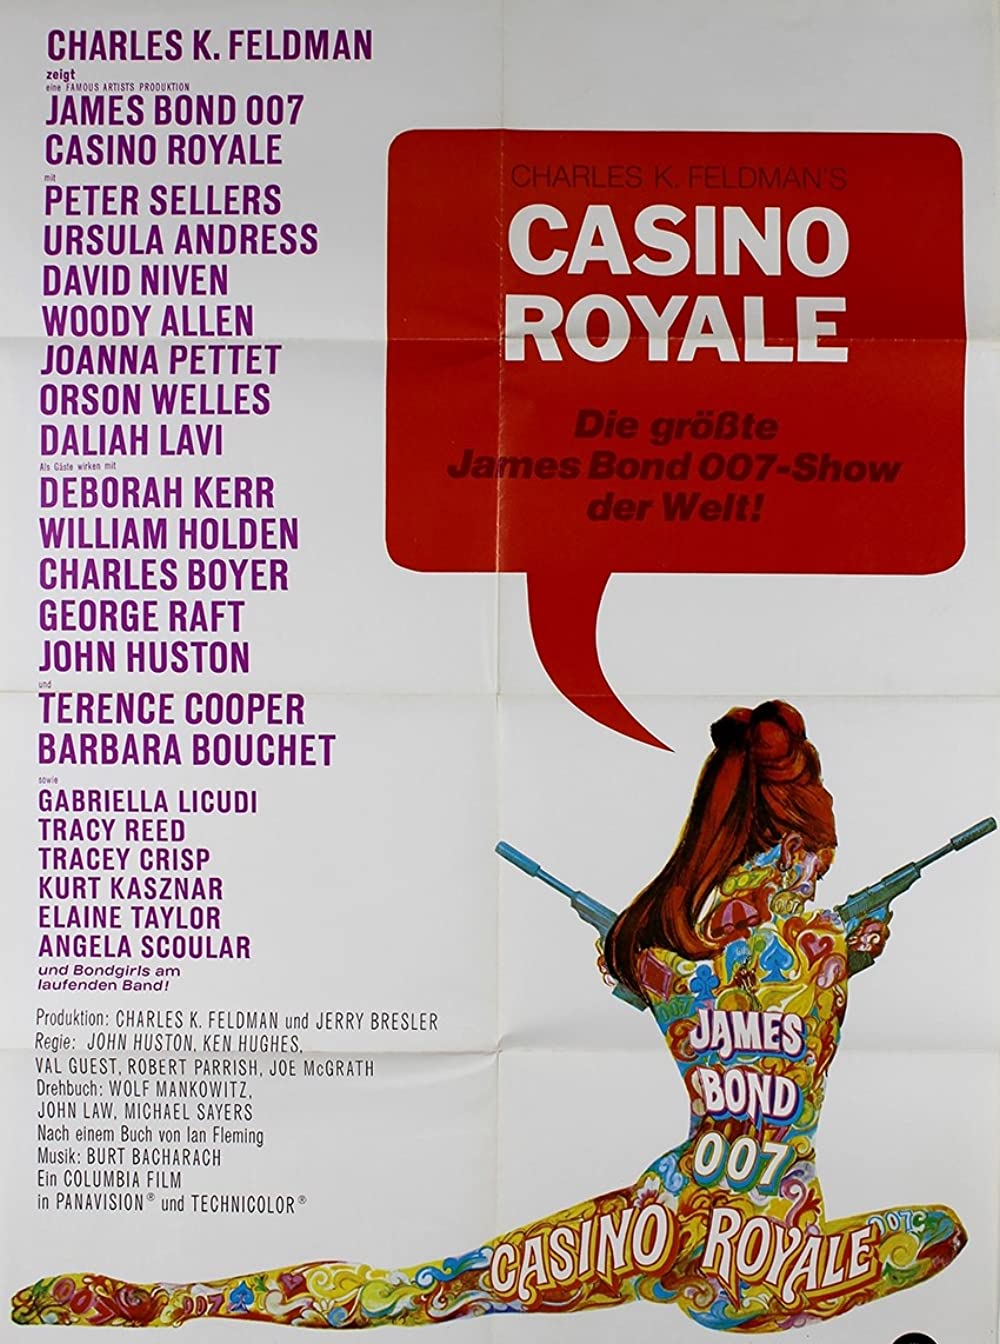 Filmbeschreibung zu Casino Royale (1967)